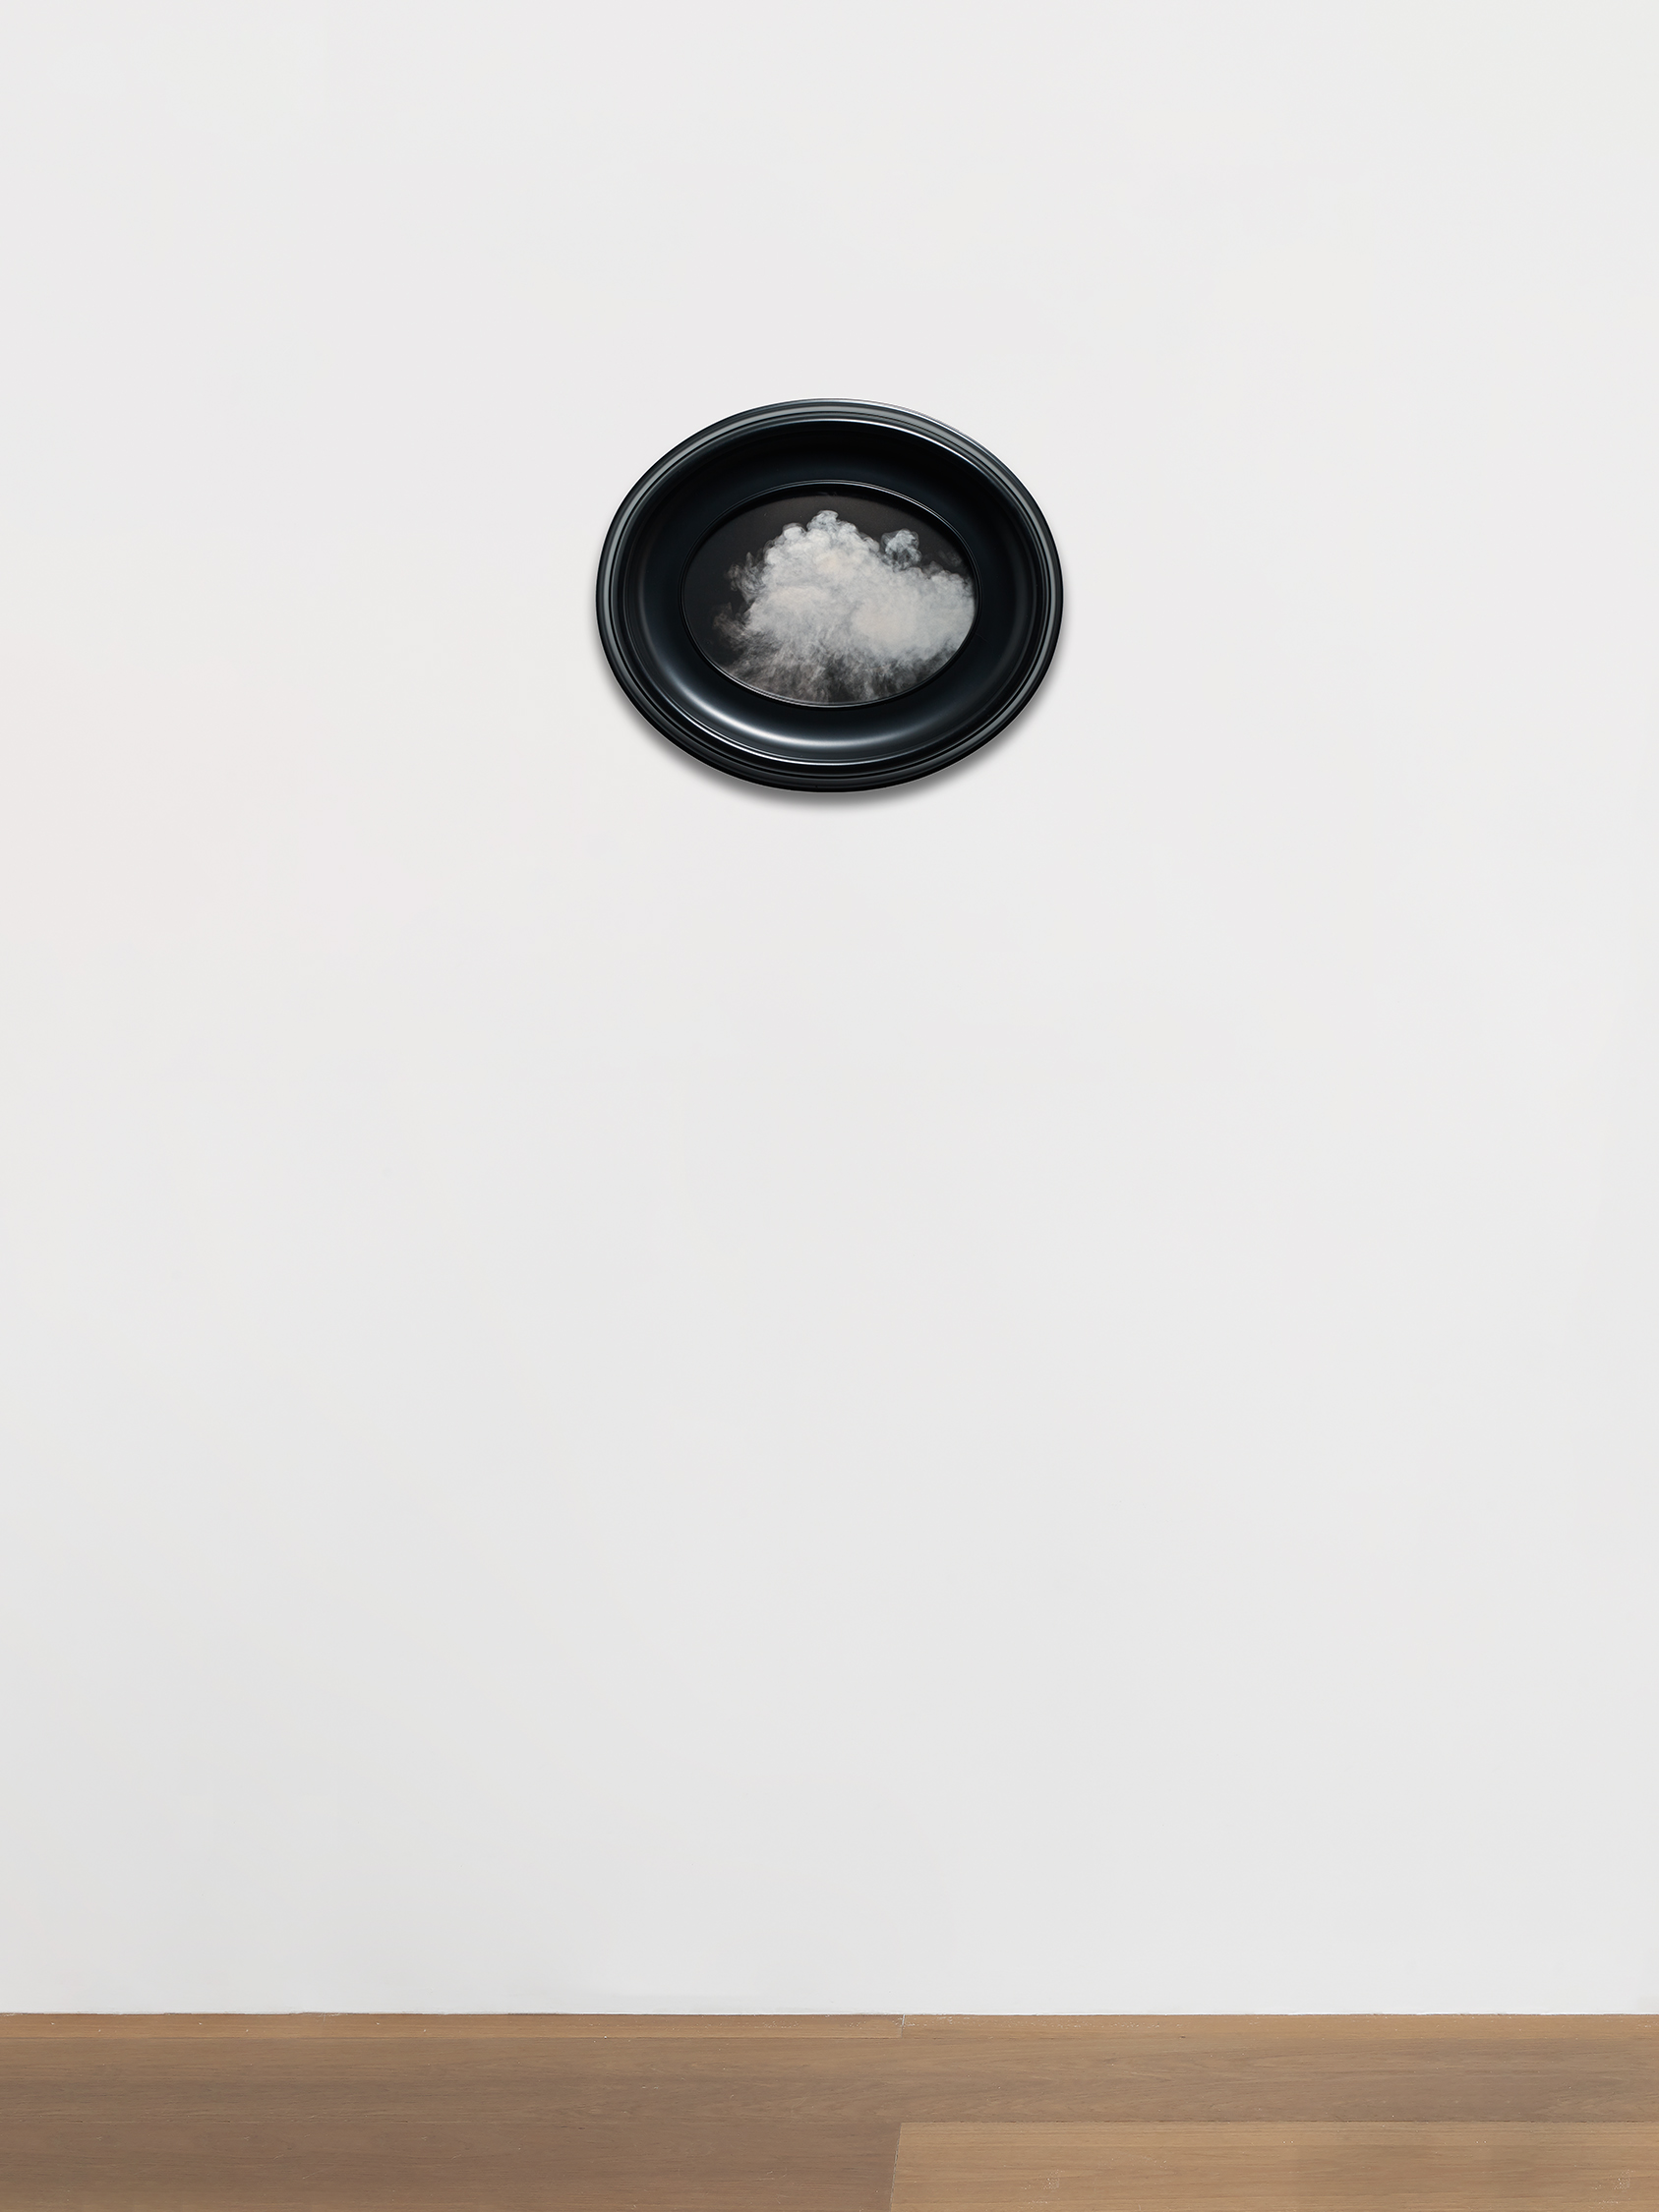 Image of Carrie Mae Weems' work Smoke See Simpson, 2011